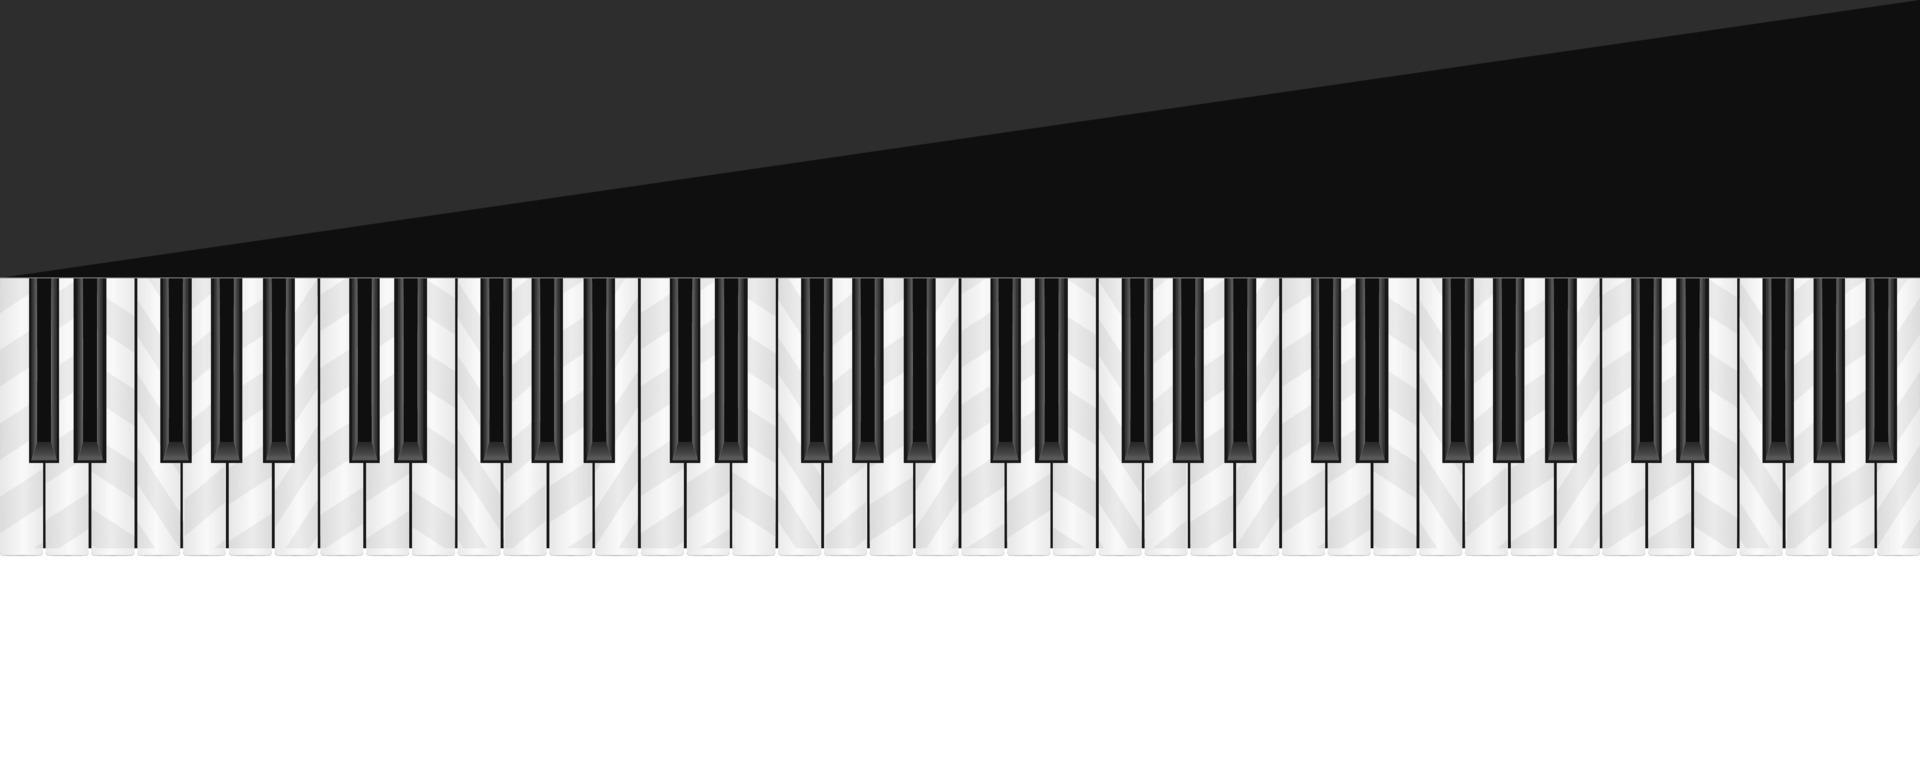 teclado de piano realista isolado no fundo branco. ilustração vetorial, vista superior vetor